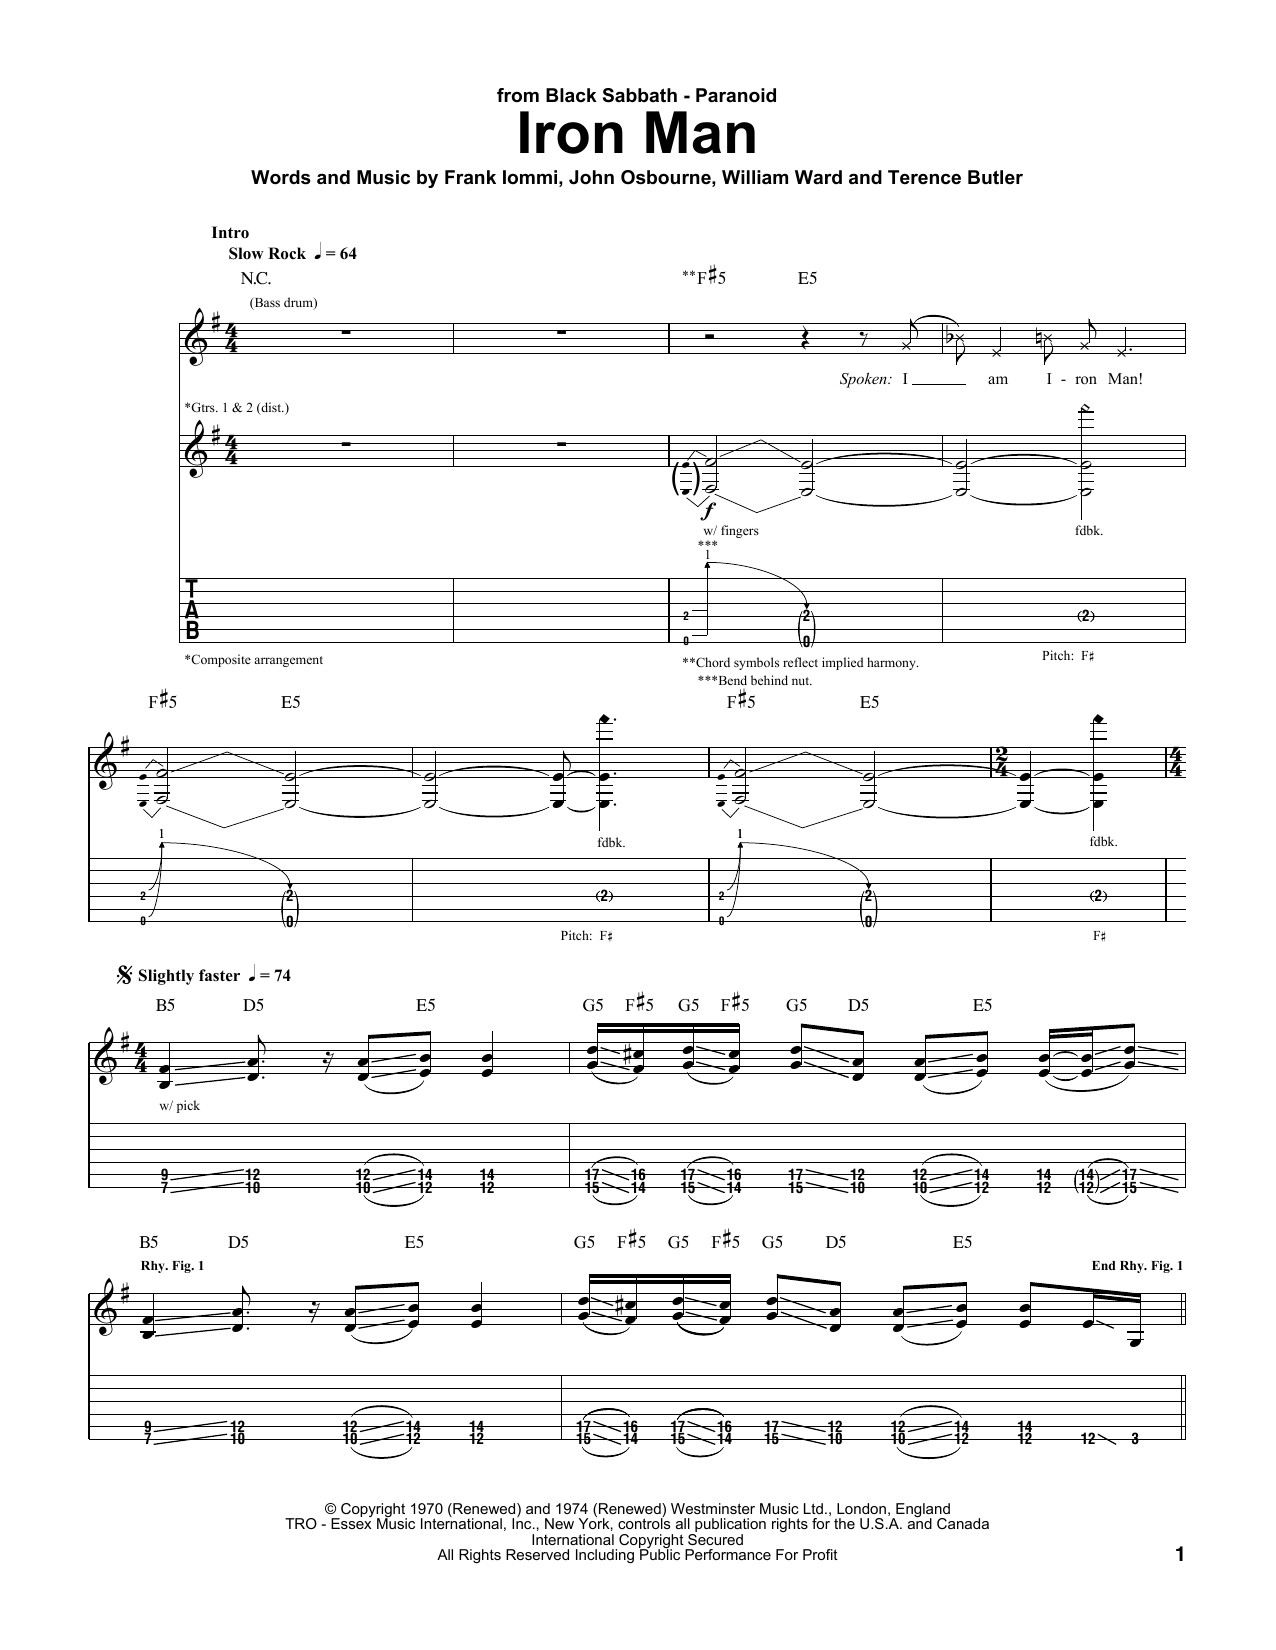 Black Sabbath Iron Man Sheet Music Notes & Chords for Guitar Lead Sheet - Download or Print PDF